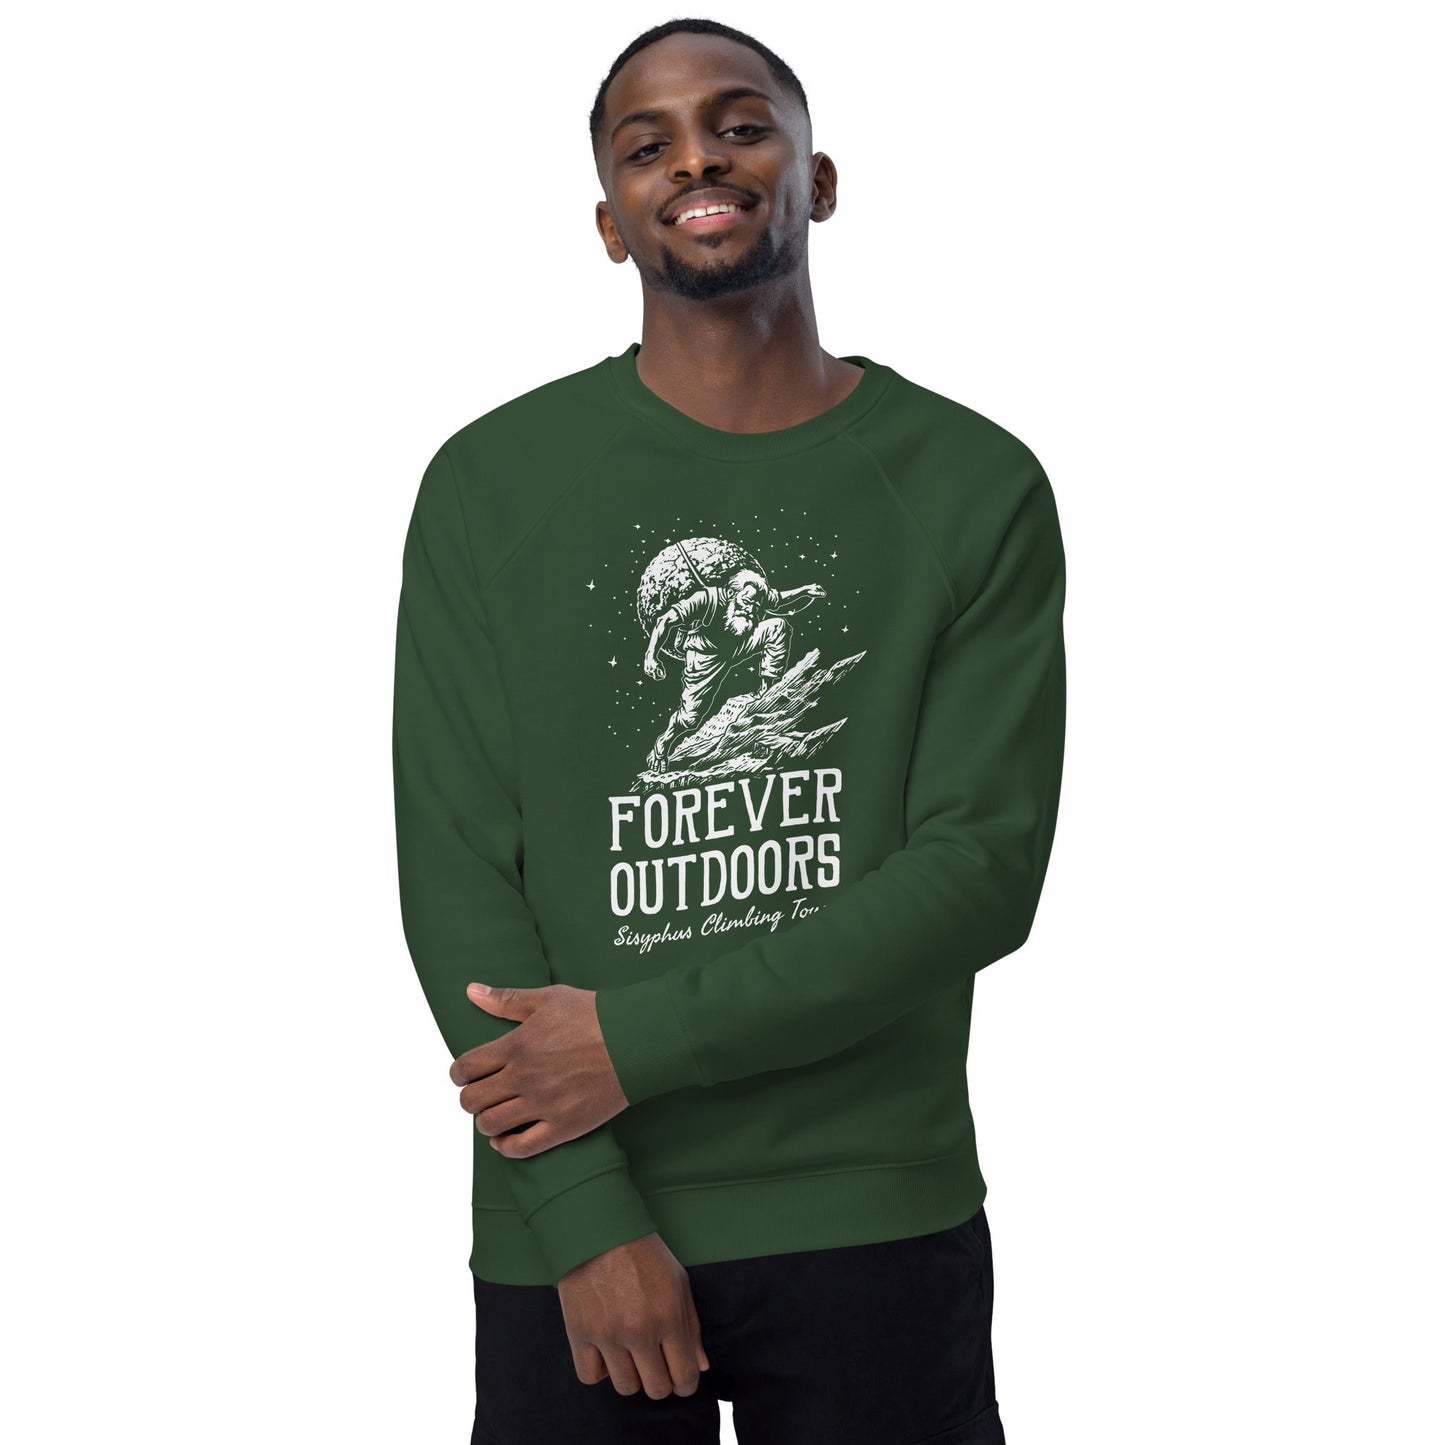 Forever Outdoors - Sisyphus Climbing Tours - Eco Sweatshirt